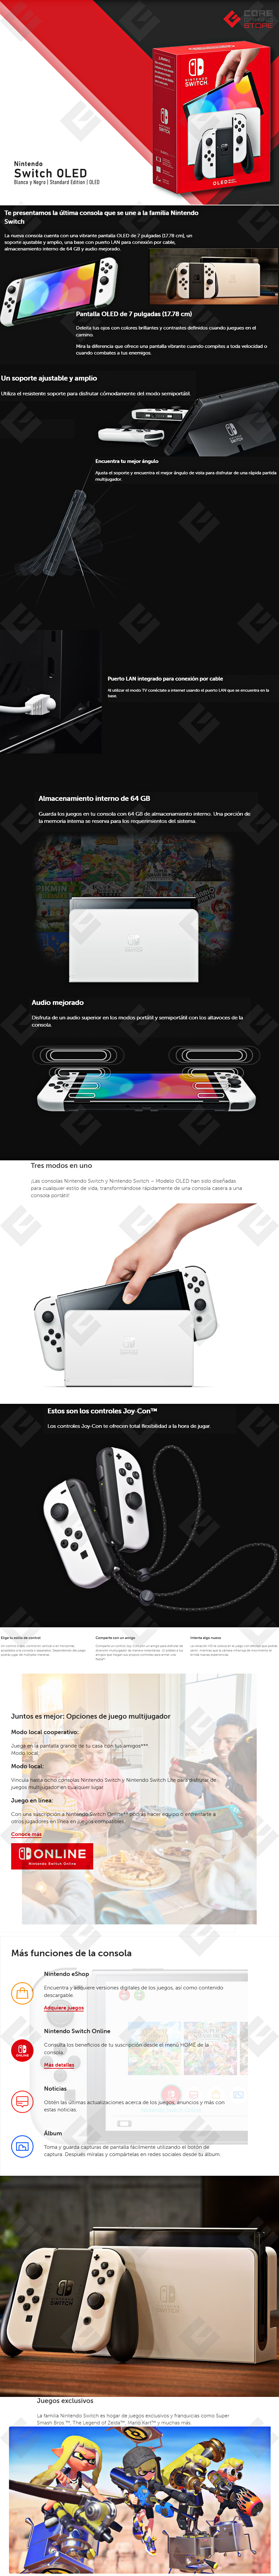 Consola Nintendo Switch OLED 64GB Standard Edition | Color blanco y negro